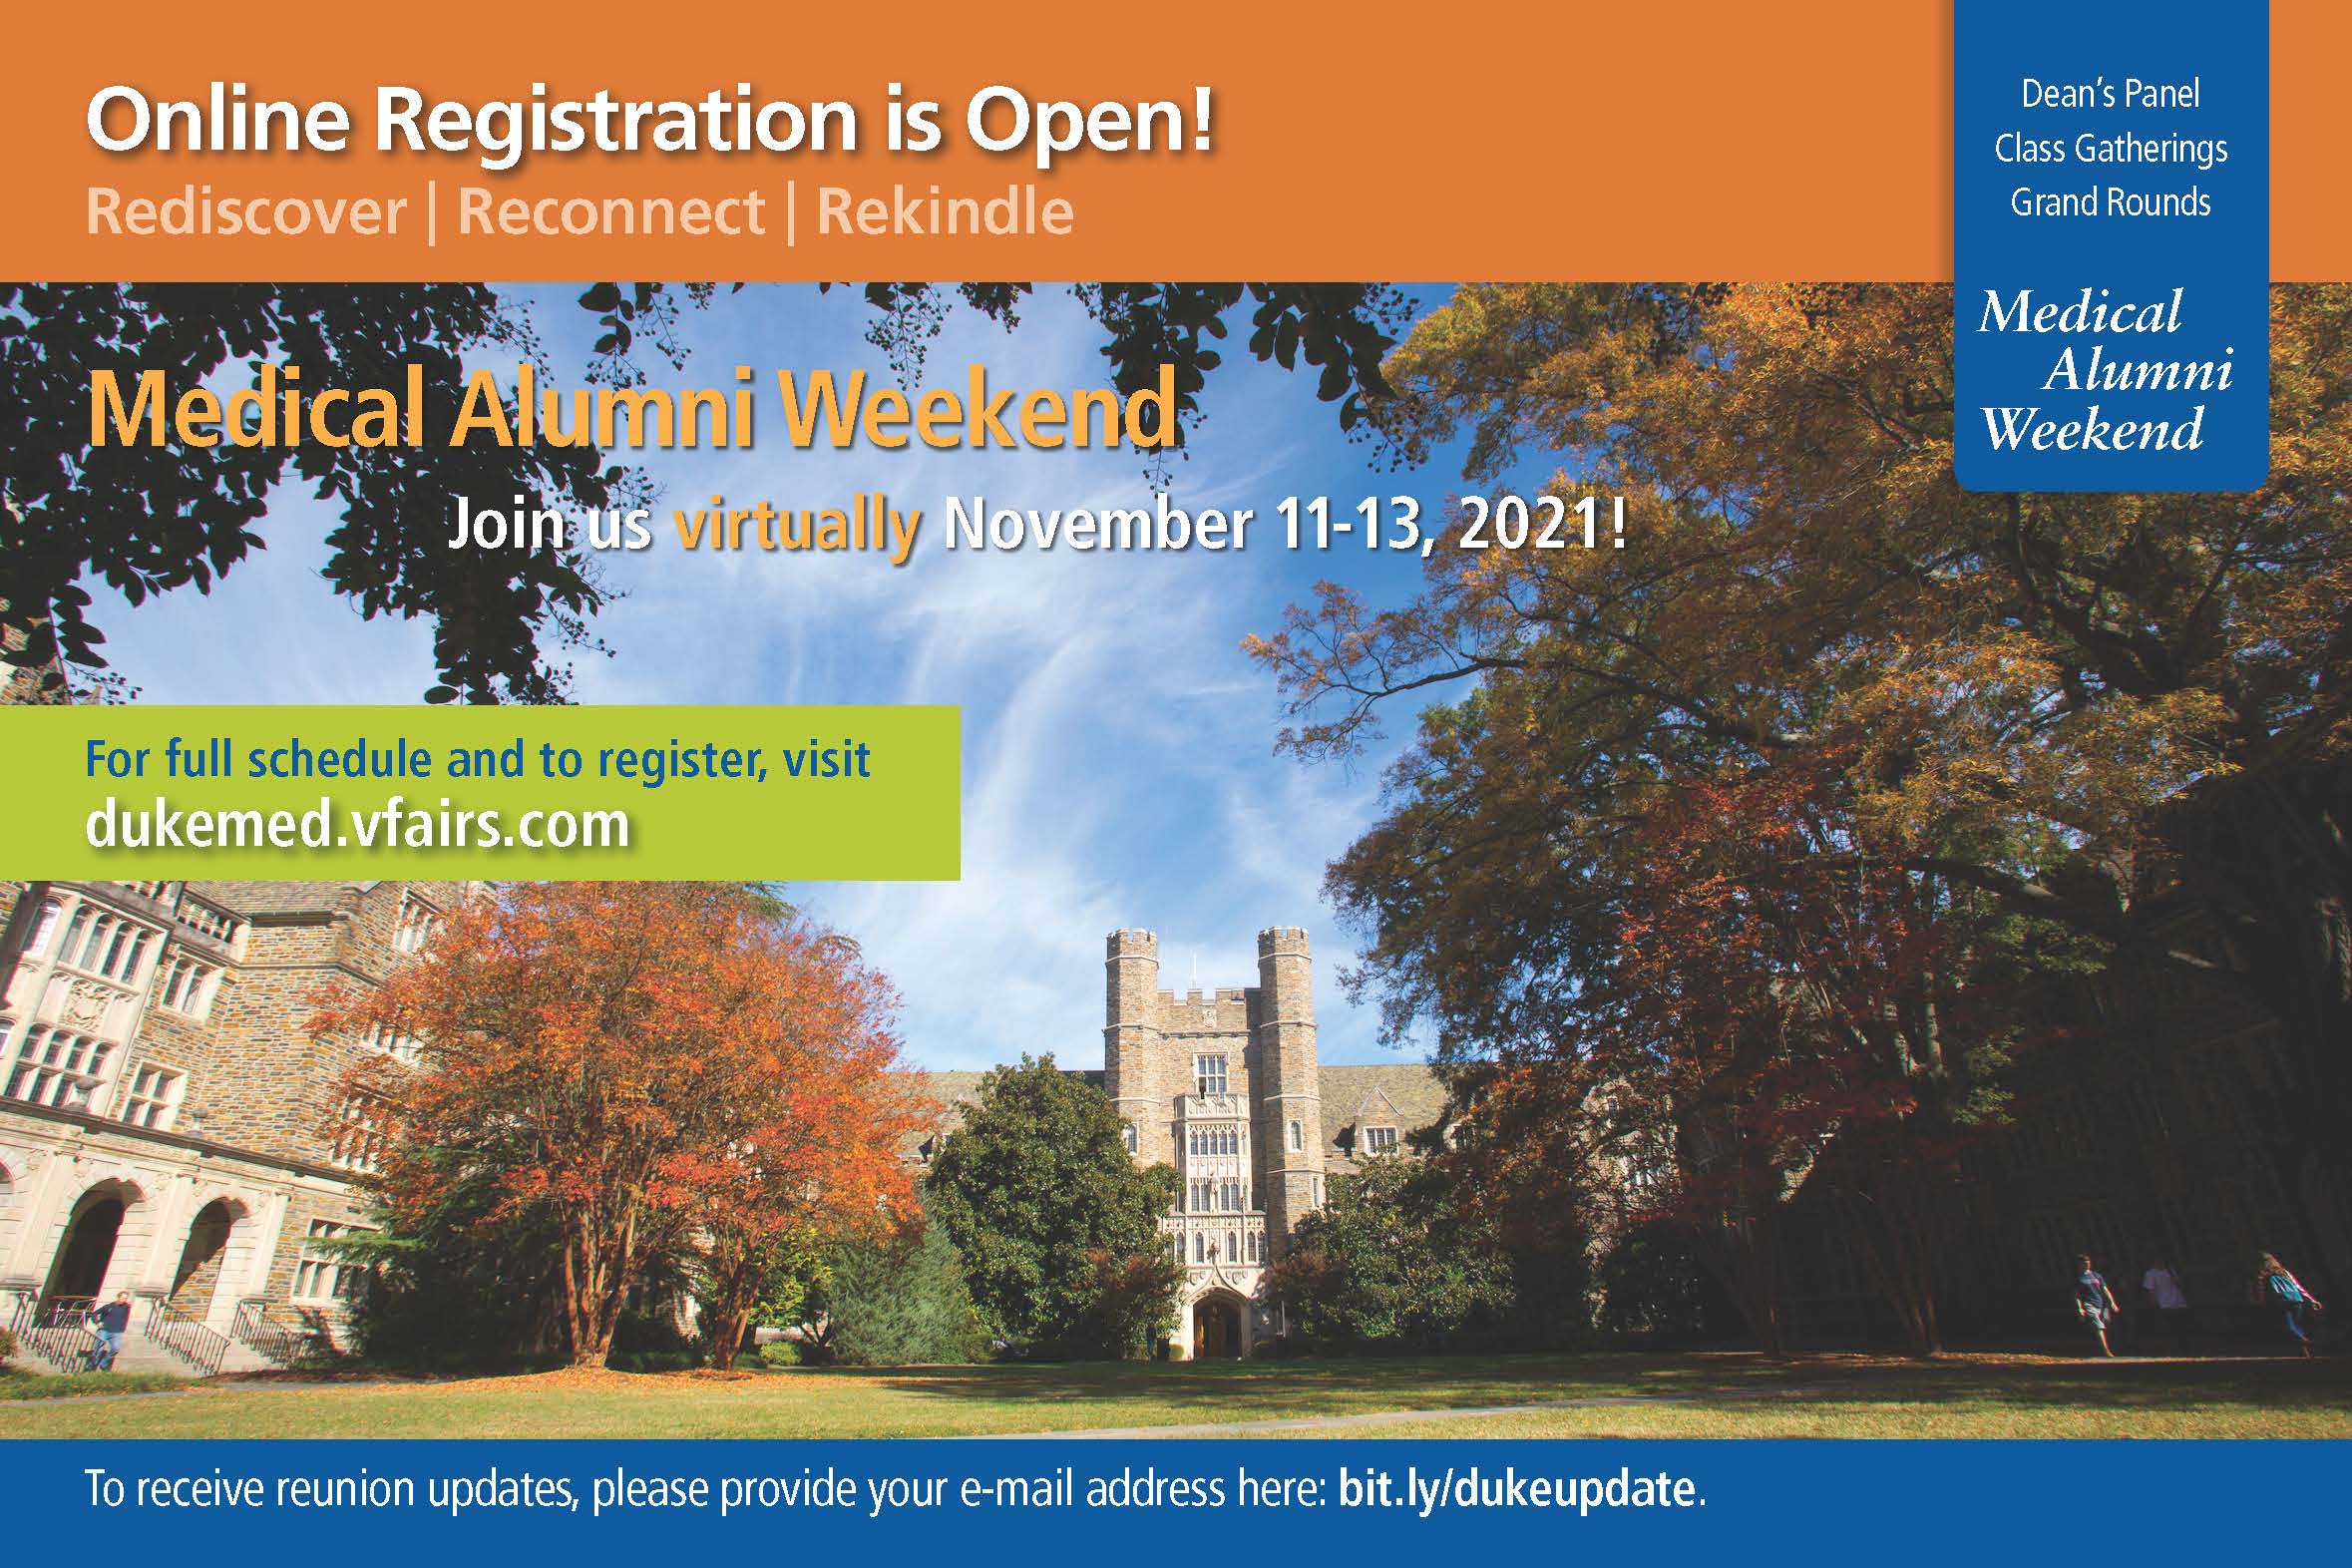 Medical Alumni Weekend registration now open!